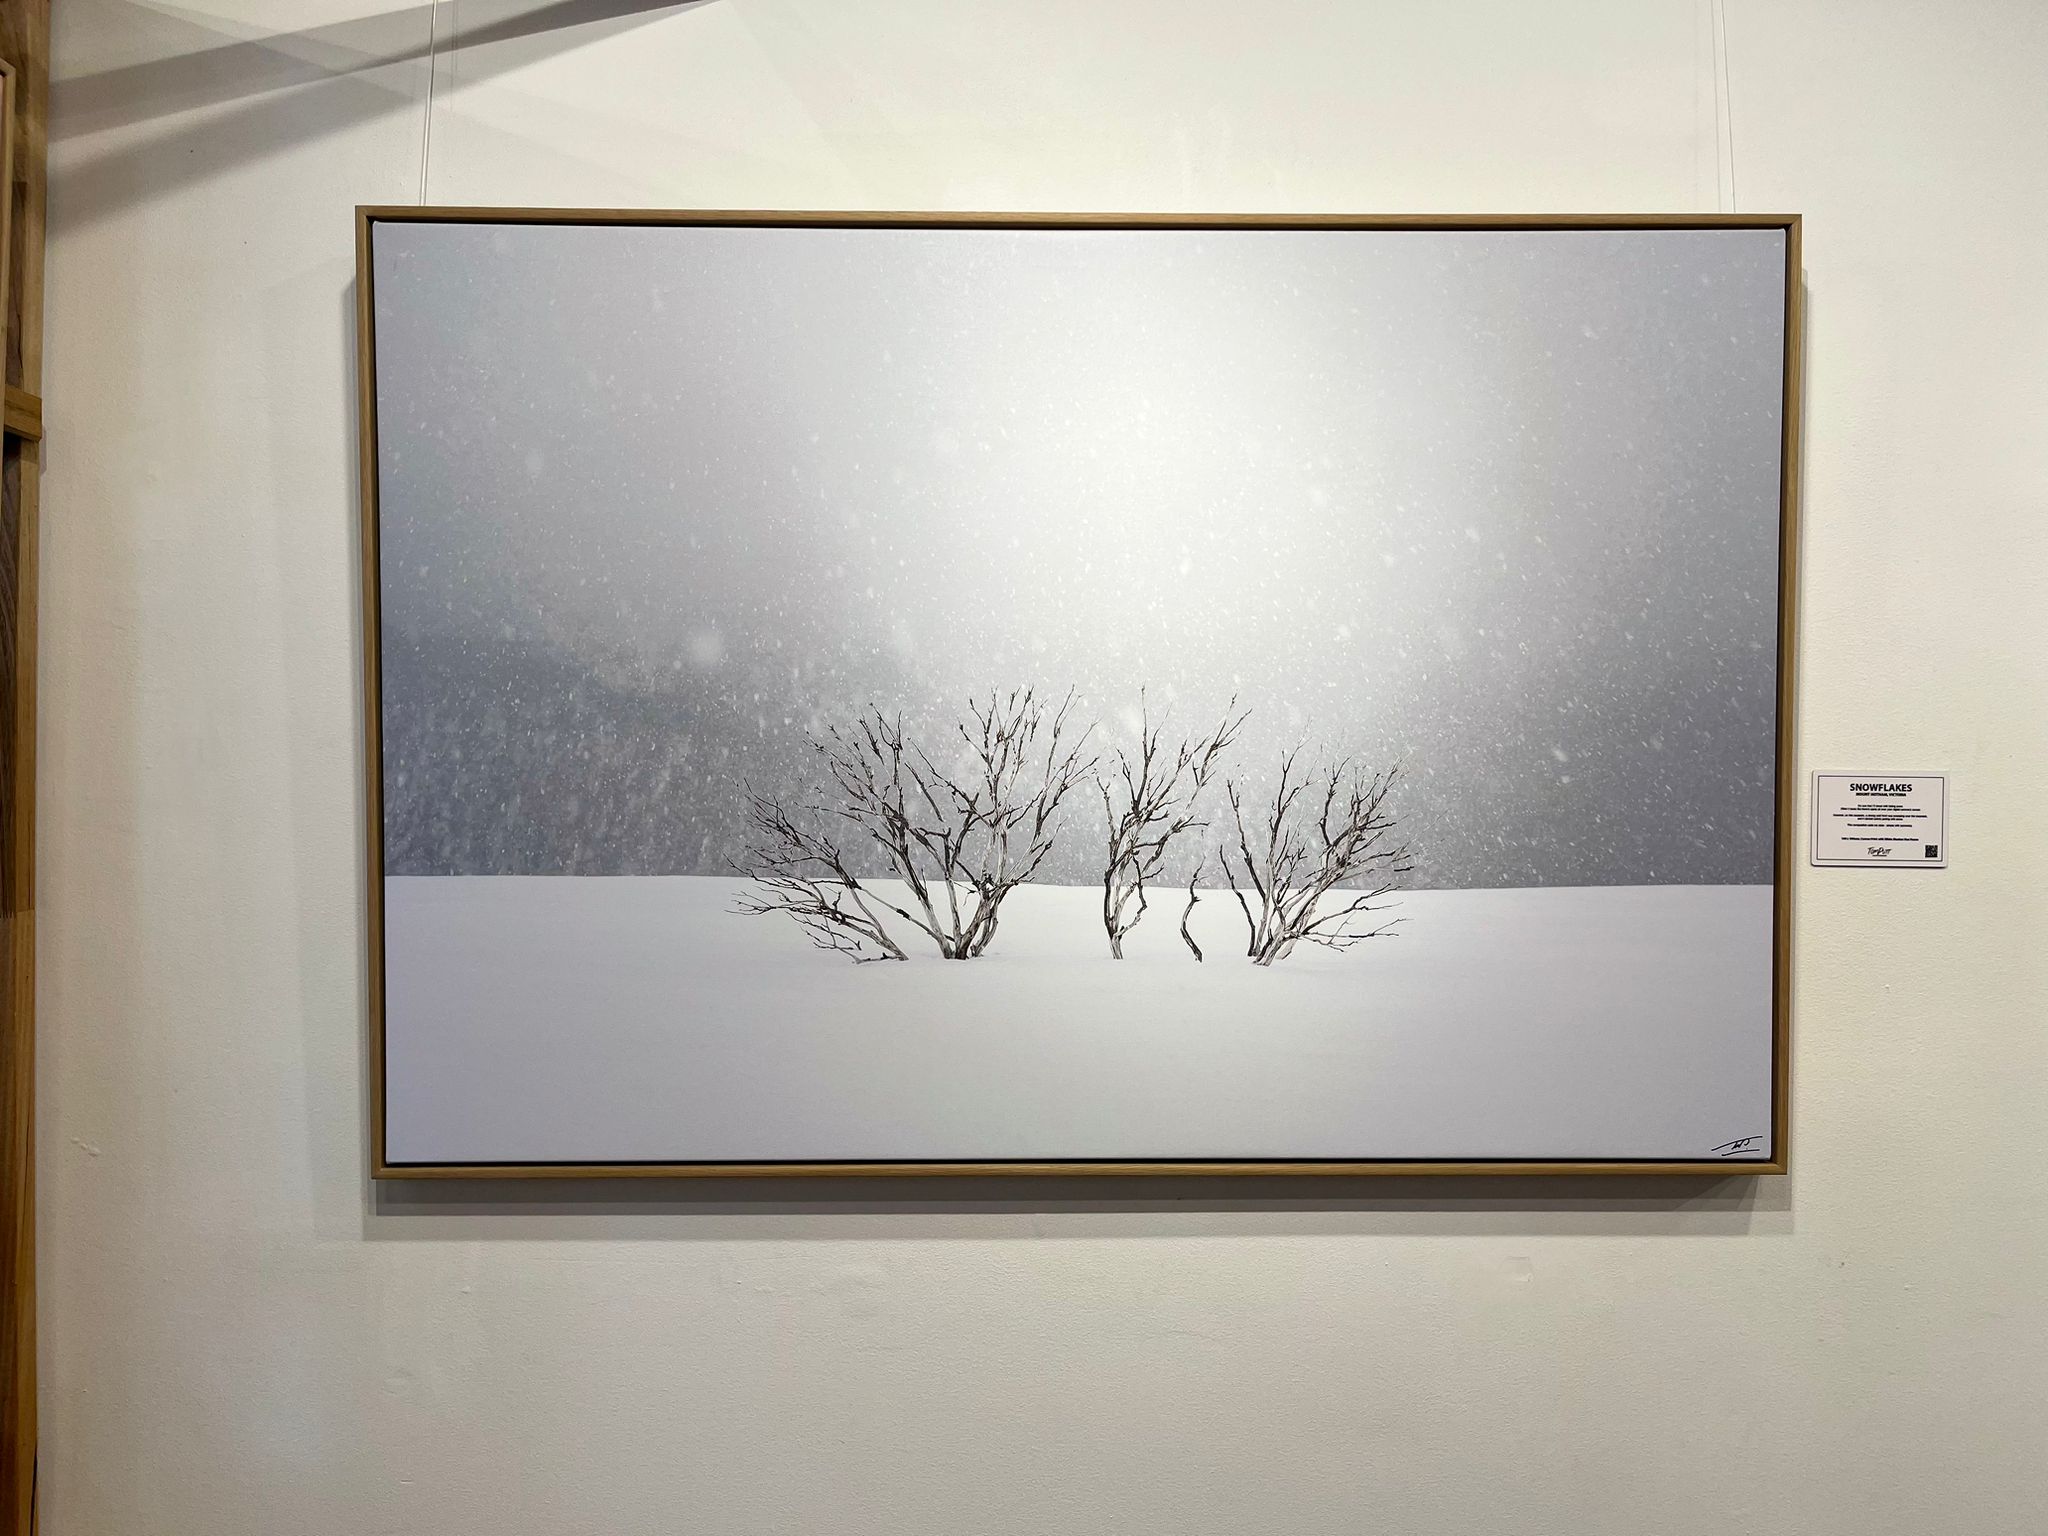 ARTWORK INSTOCK - Snowflakes, Mount Hotham, Victoria - 150 x 100cms Canvas Raw Oak Print